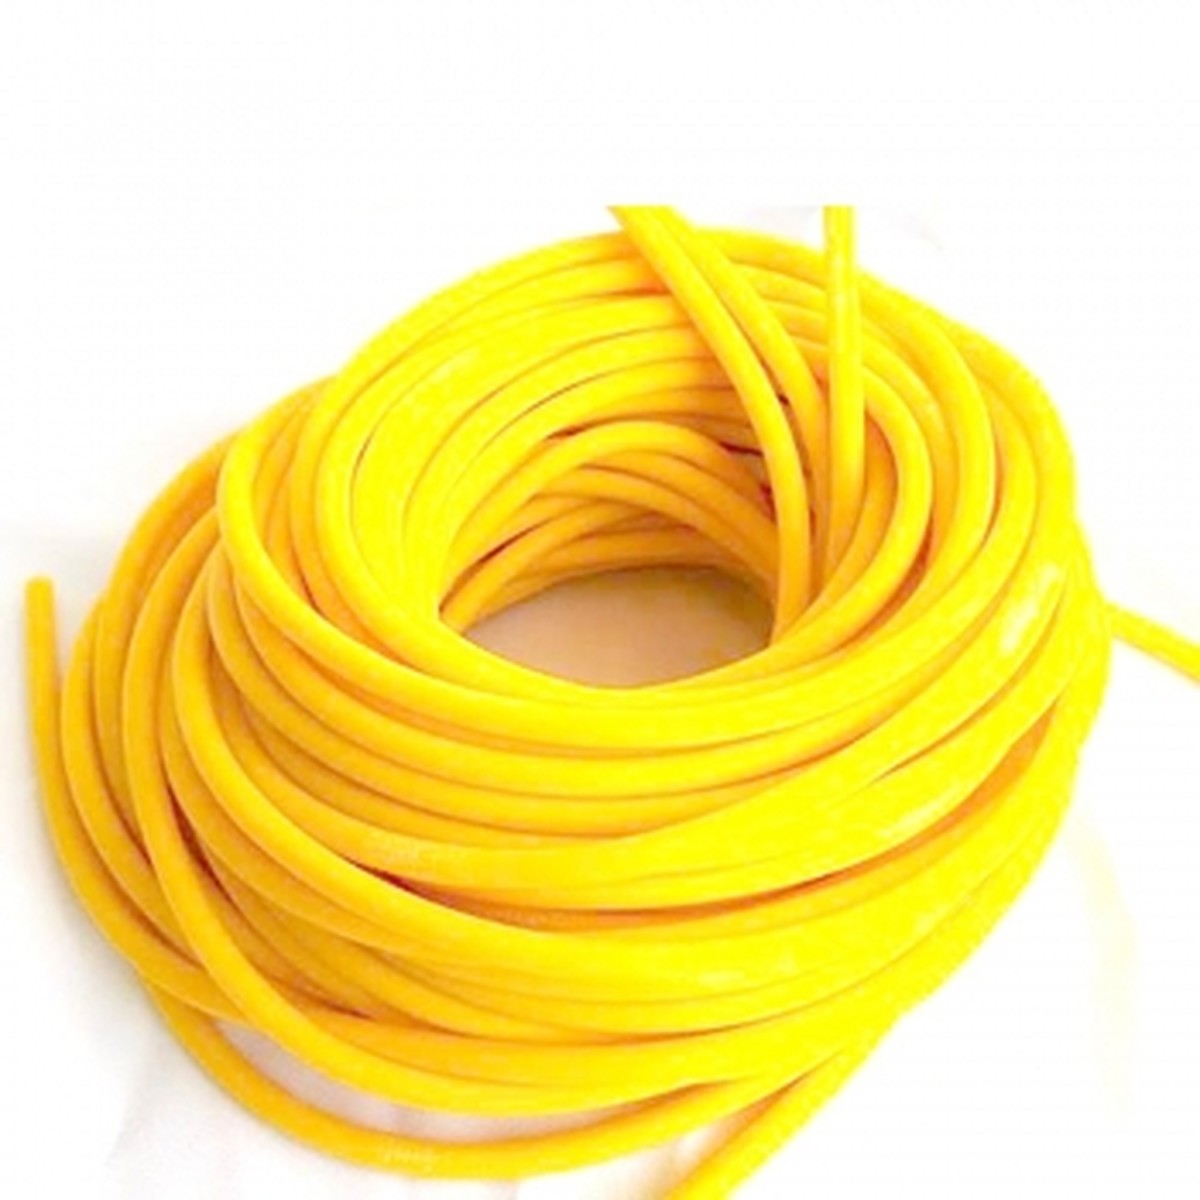 Foto do produto Thera Tubing amarelo (suave) 1,5m